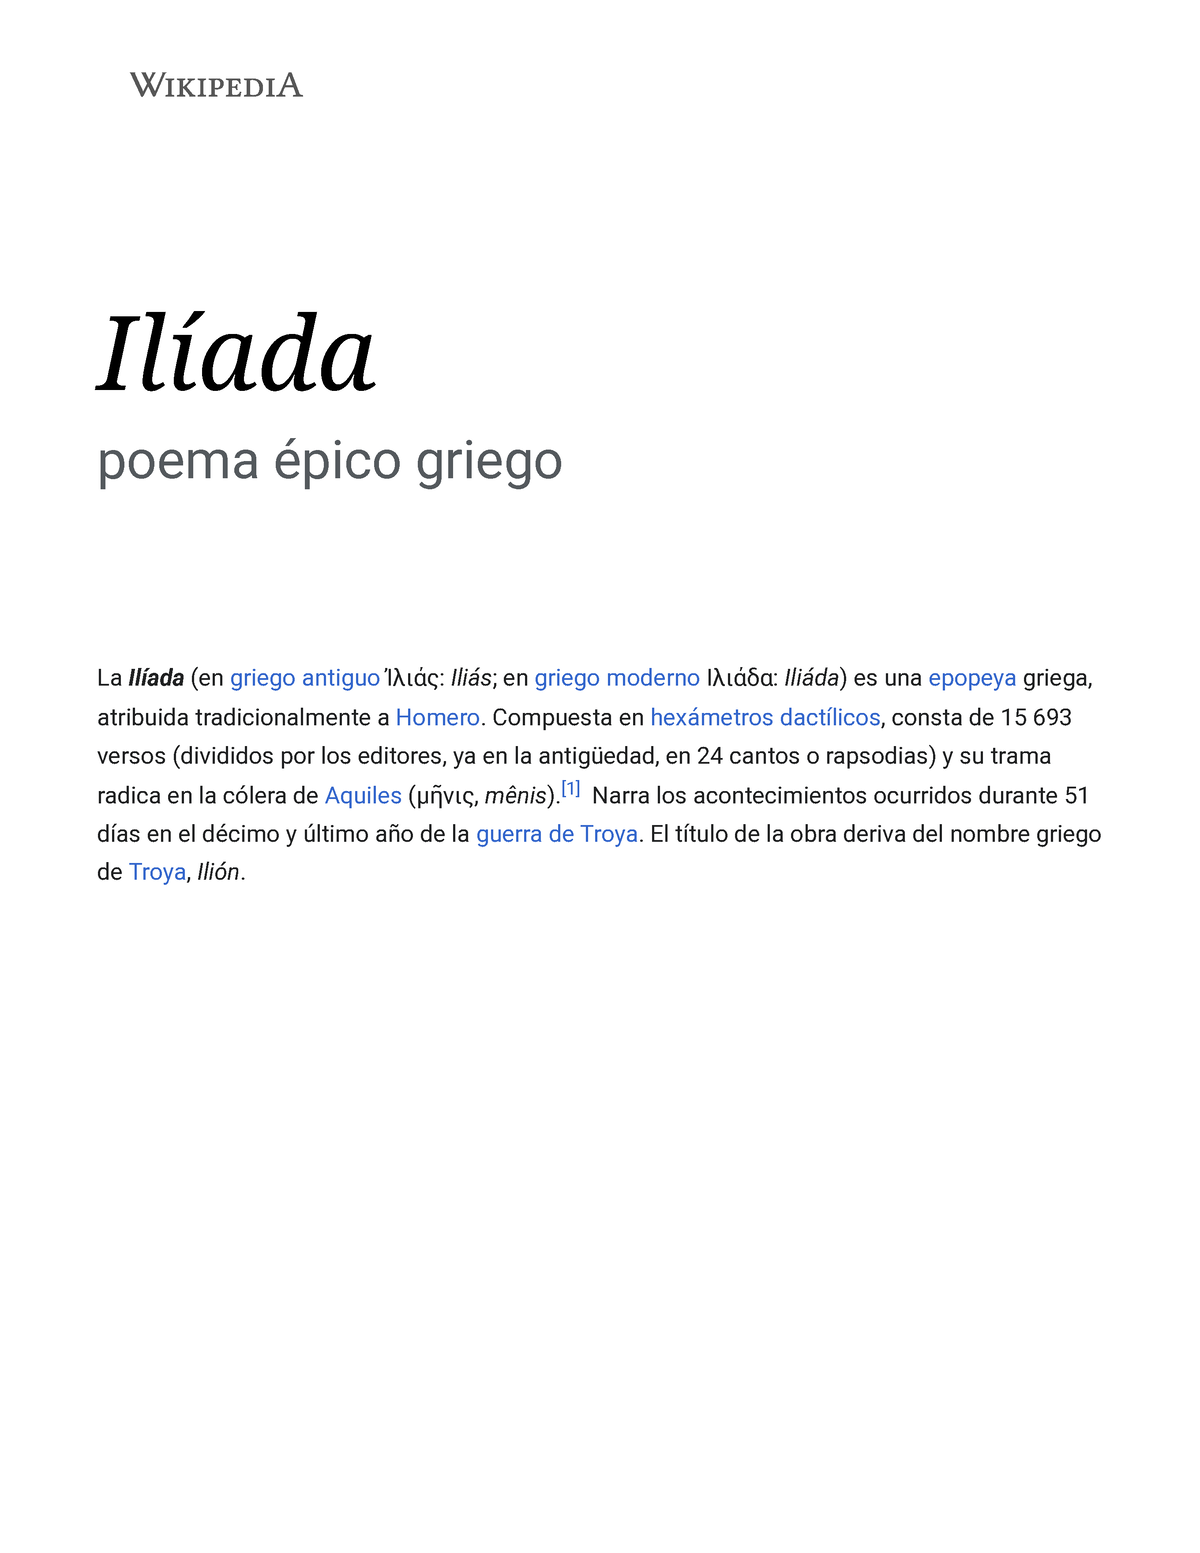 Ilíada - Wikipedia, la enciclopedia libre